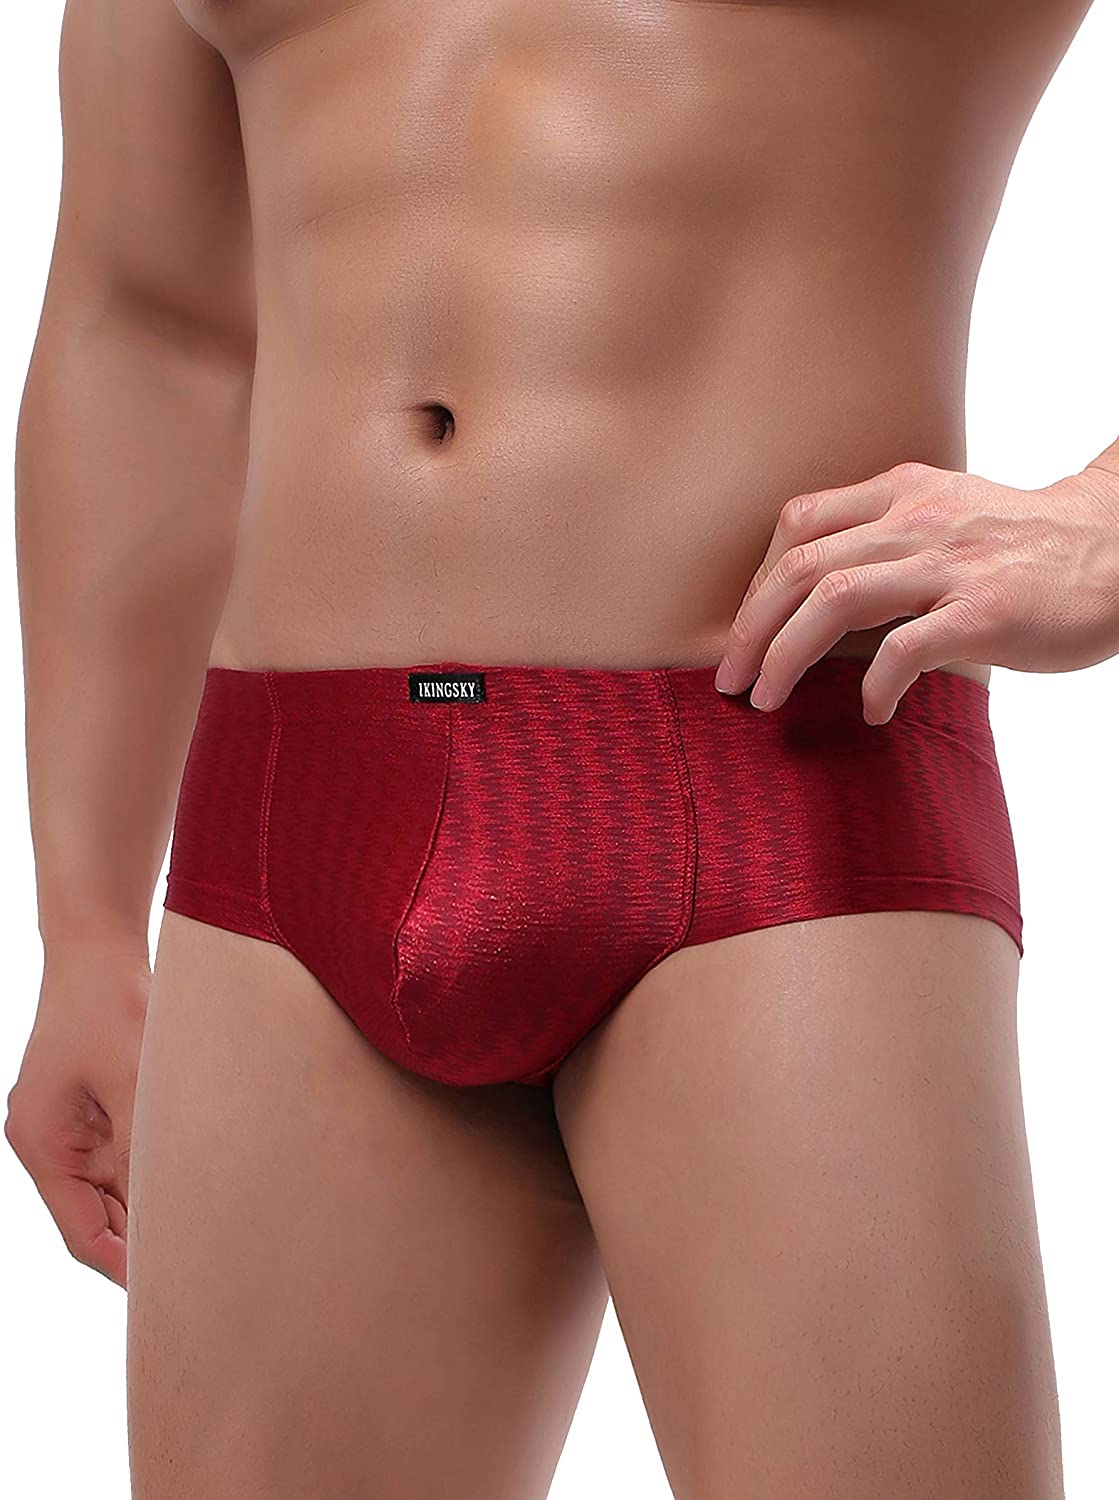 Ikingsky Mens Shining Cheeky Boxer Briefs Sexy Mini Cheek Thong Underwear Stret Ebay